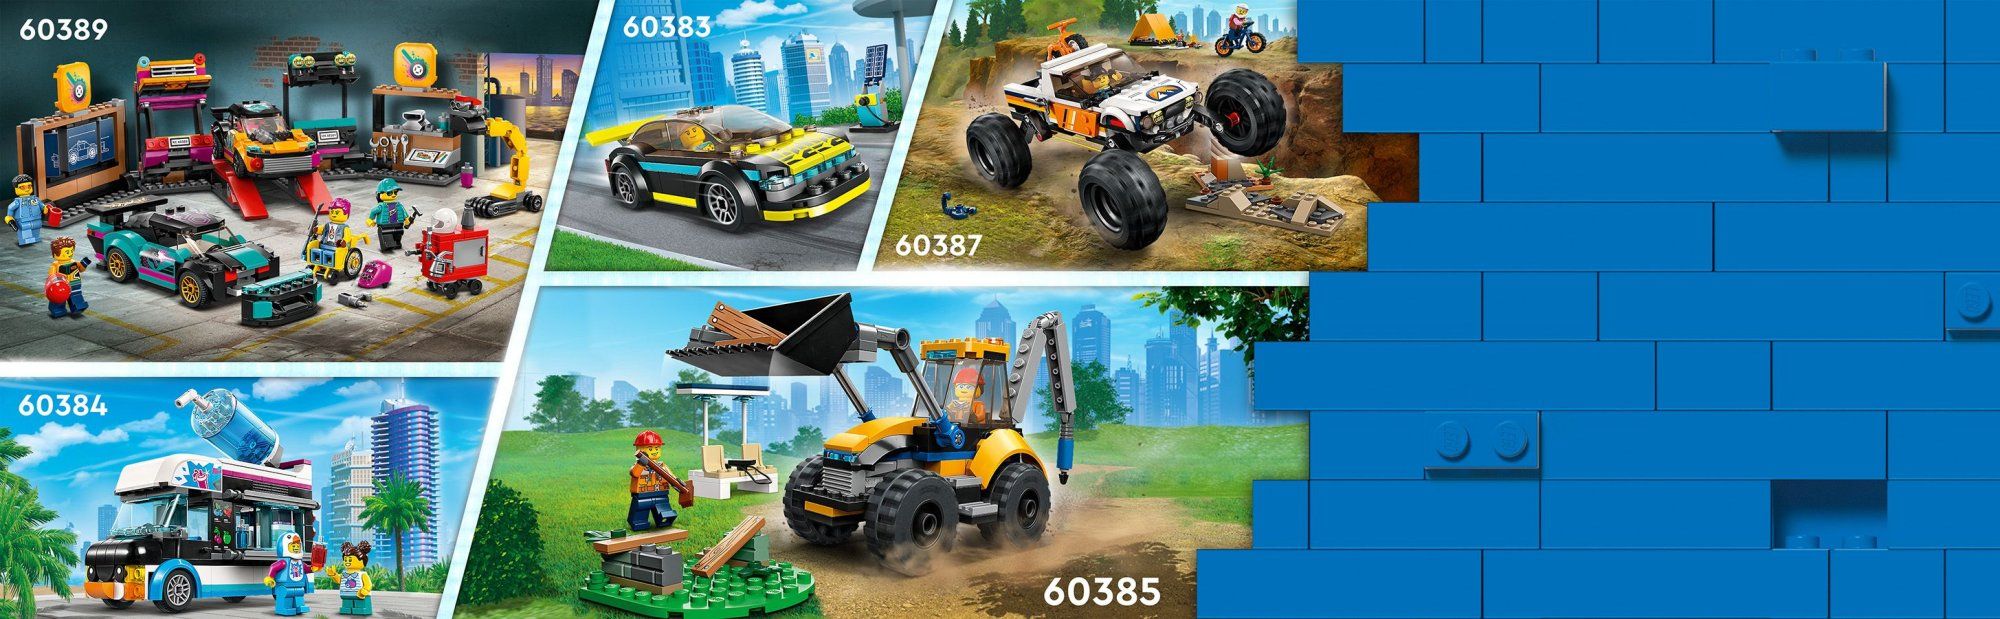 LEGO City 60385 Bagr s rypadlem